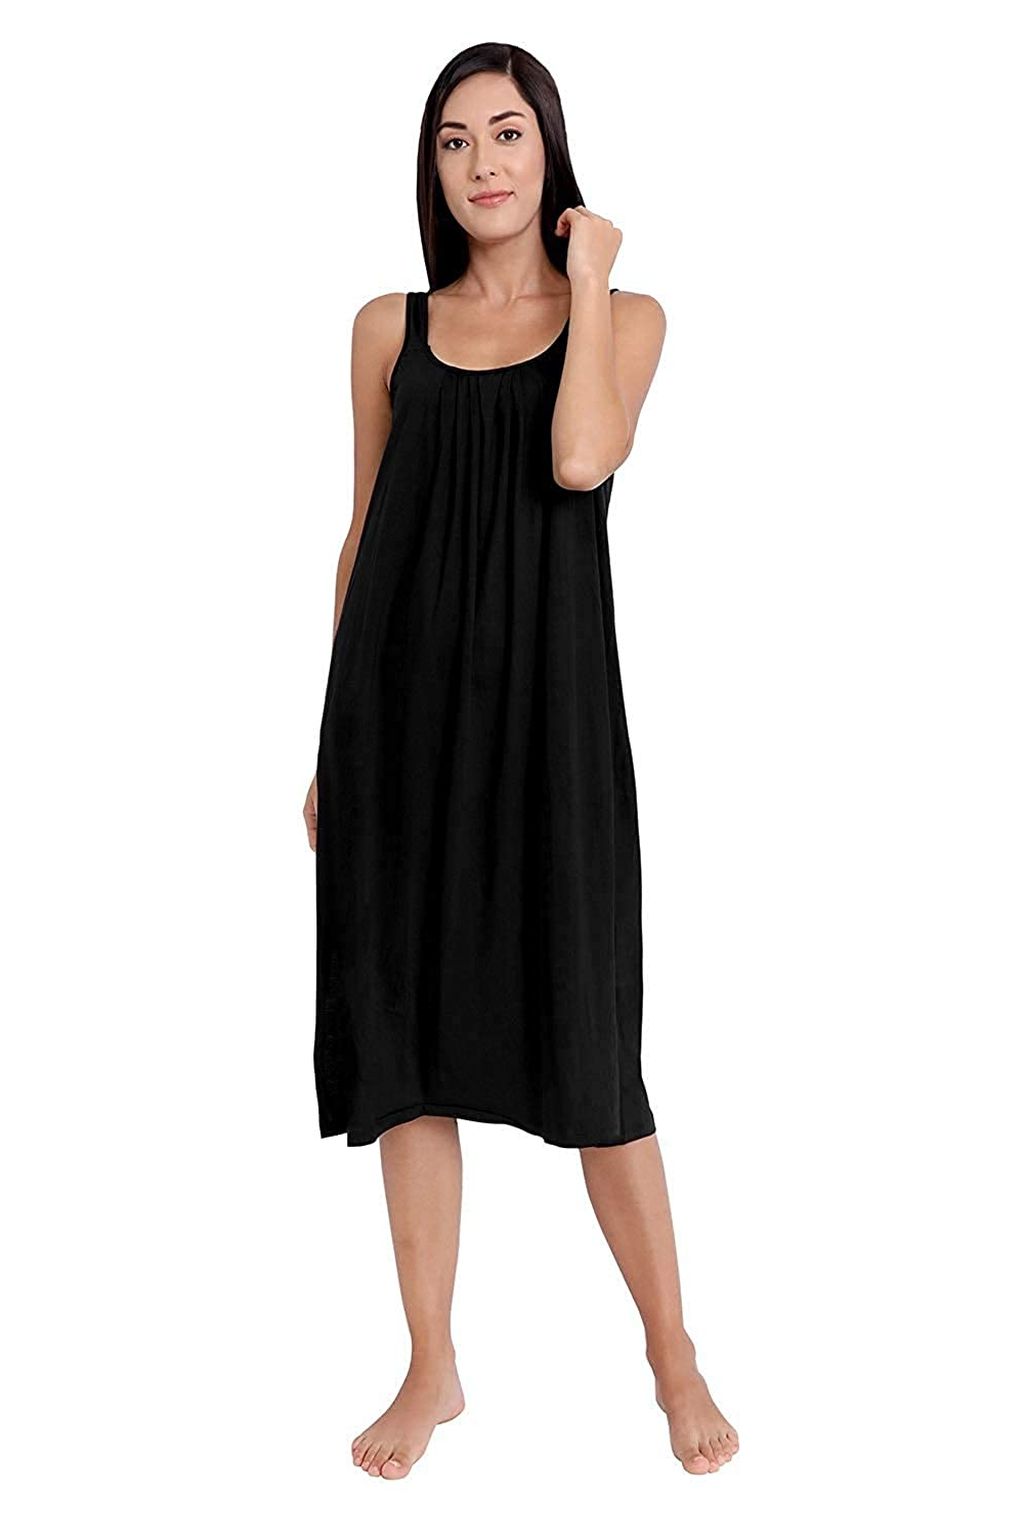 Women's Cotton Long Camisole for Kurti, Suit Slips for Women, Black Color Women  Inner Wear, Black Cotton Slip Dress, Slip Under Dress Gifts -  Israel